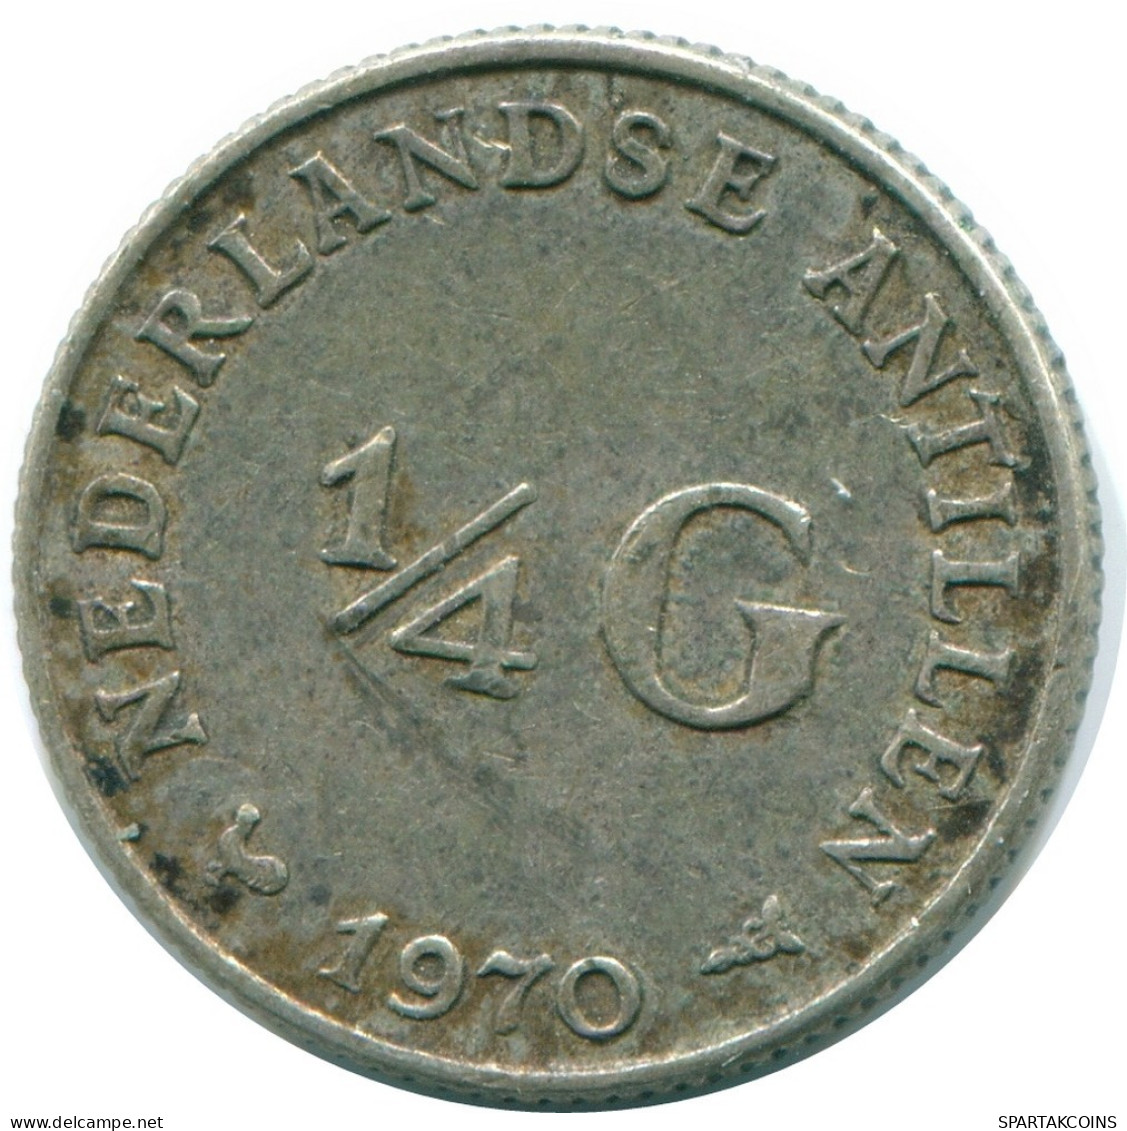 1/4 GULDEN 1970 NETHERLANDS ANTILLES SILVER Colonial Coin #NL11712.4.U.A - Antillas Neerlandesas